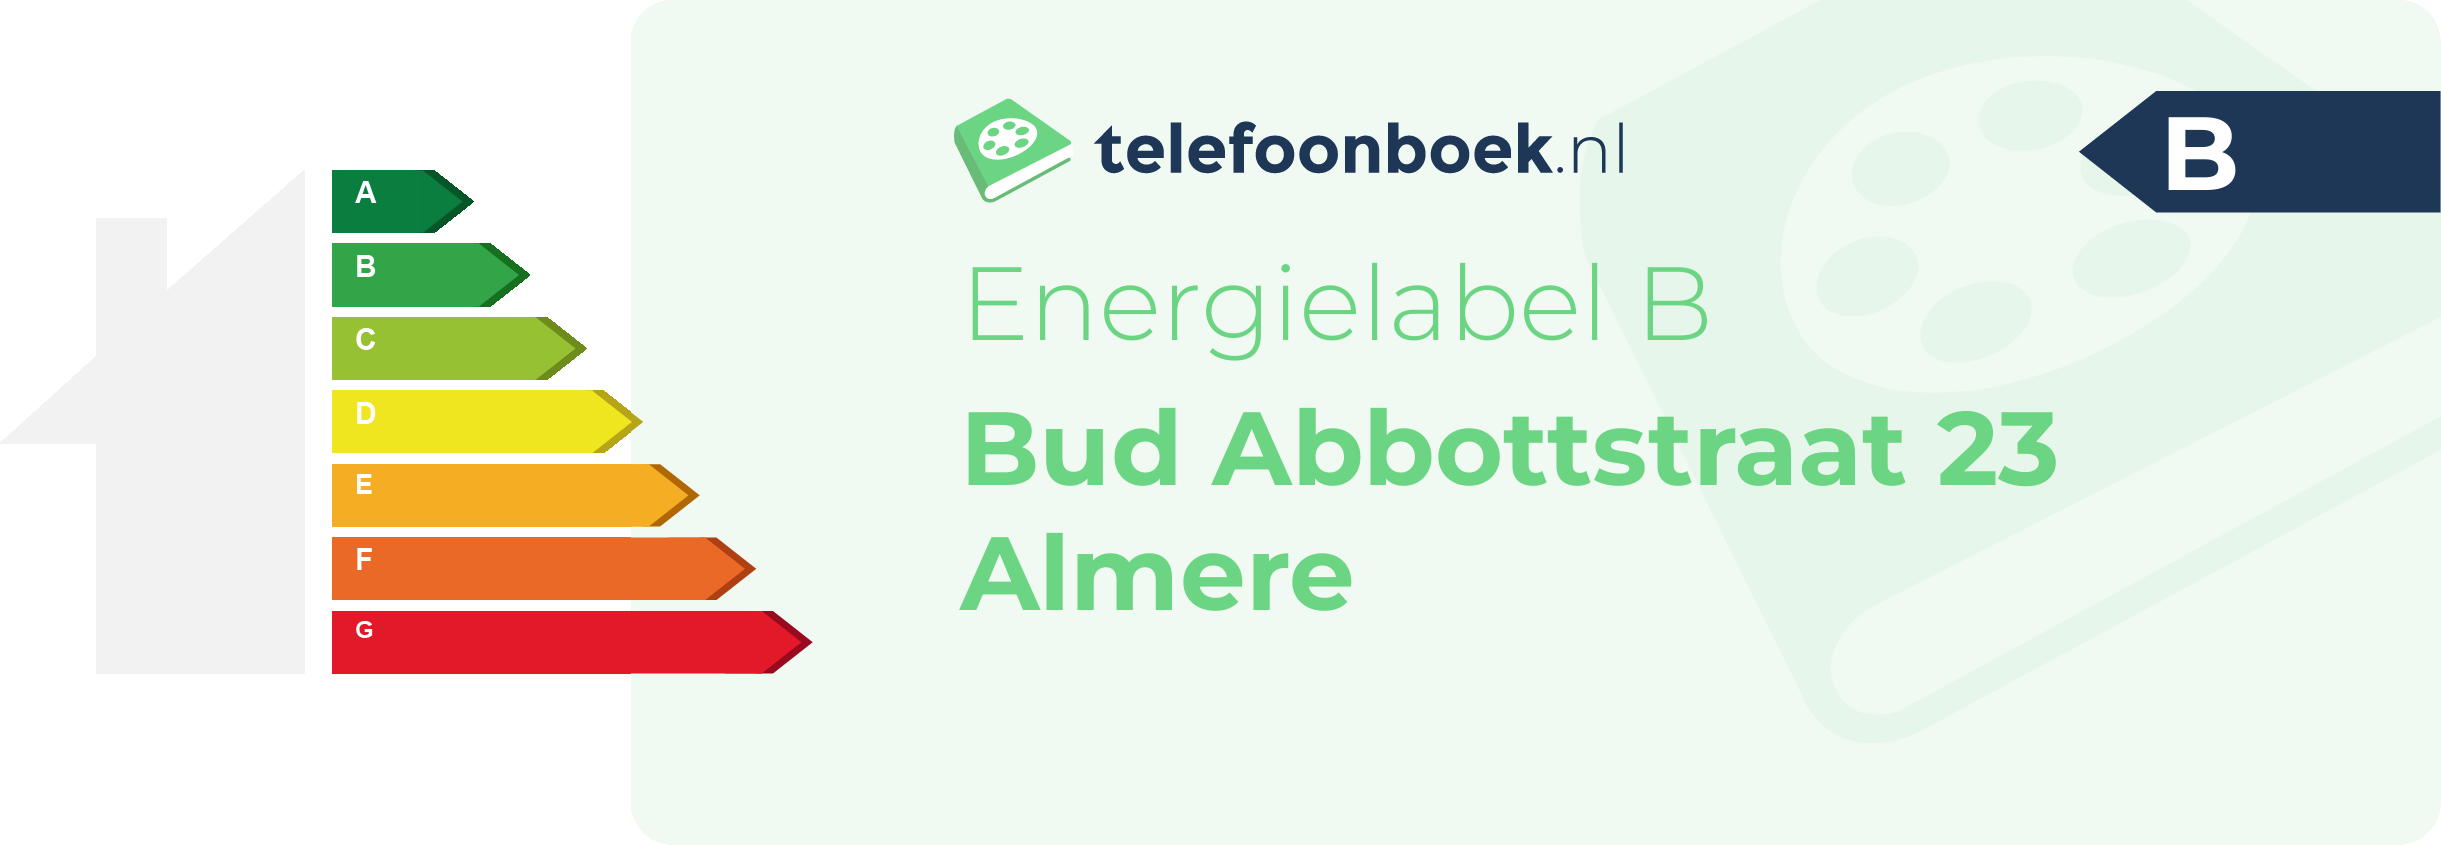 Energielabel Bud Abbottstraat 23 Almere